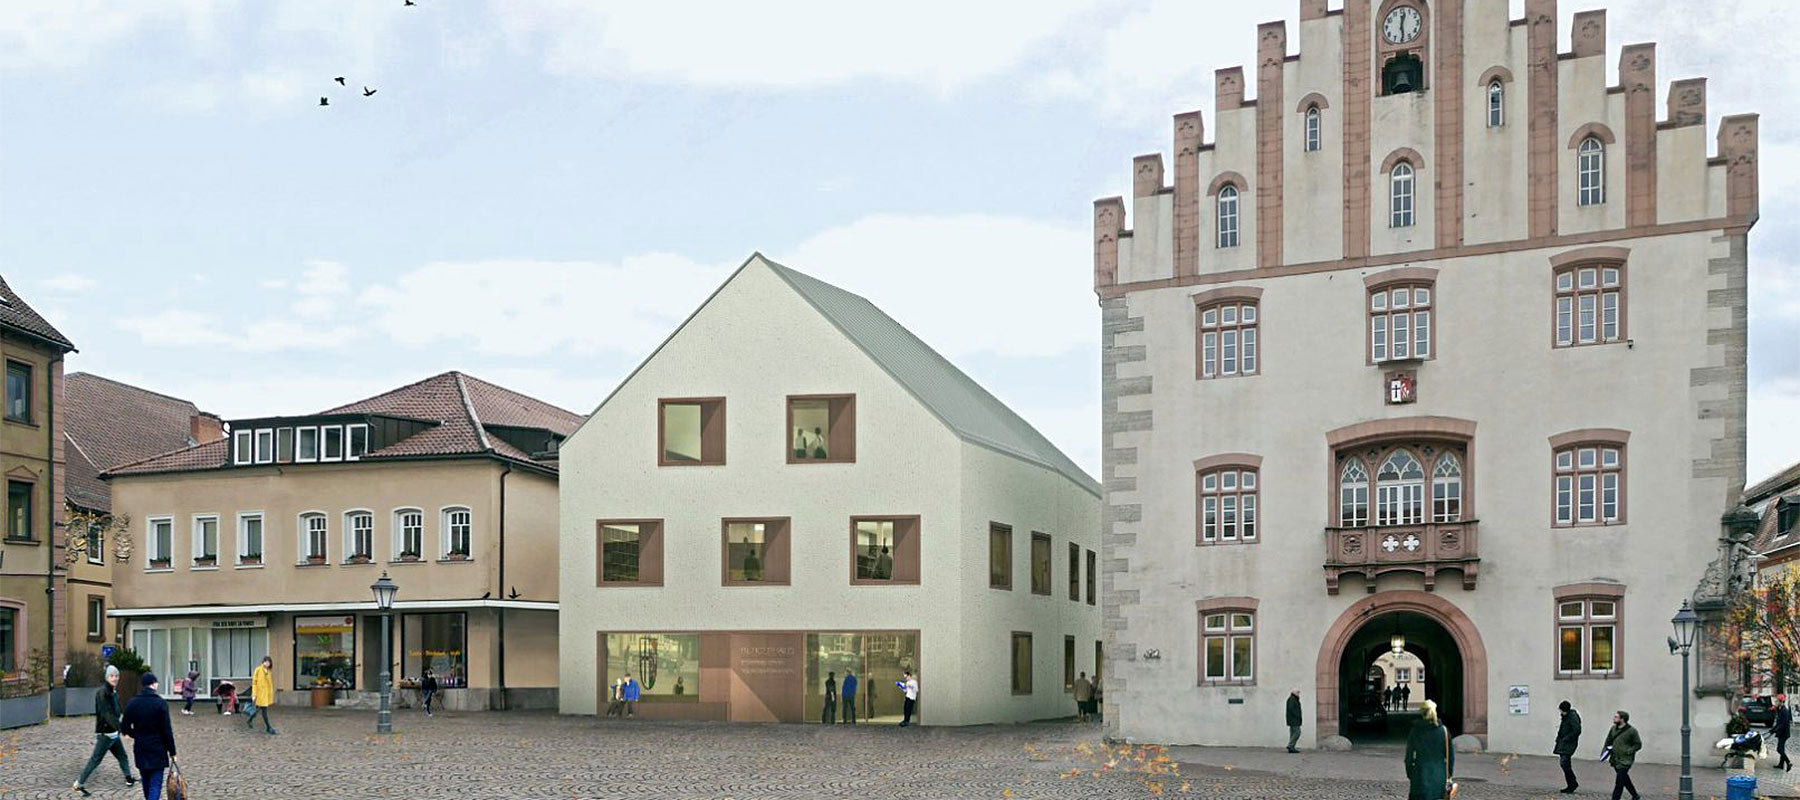 Das Bürgerhaus in Hammelburg